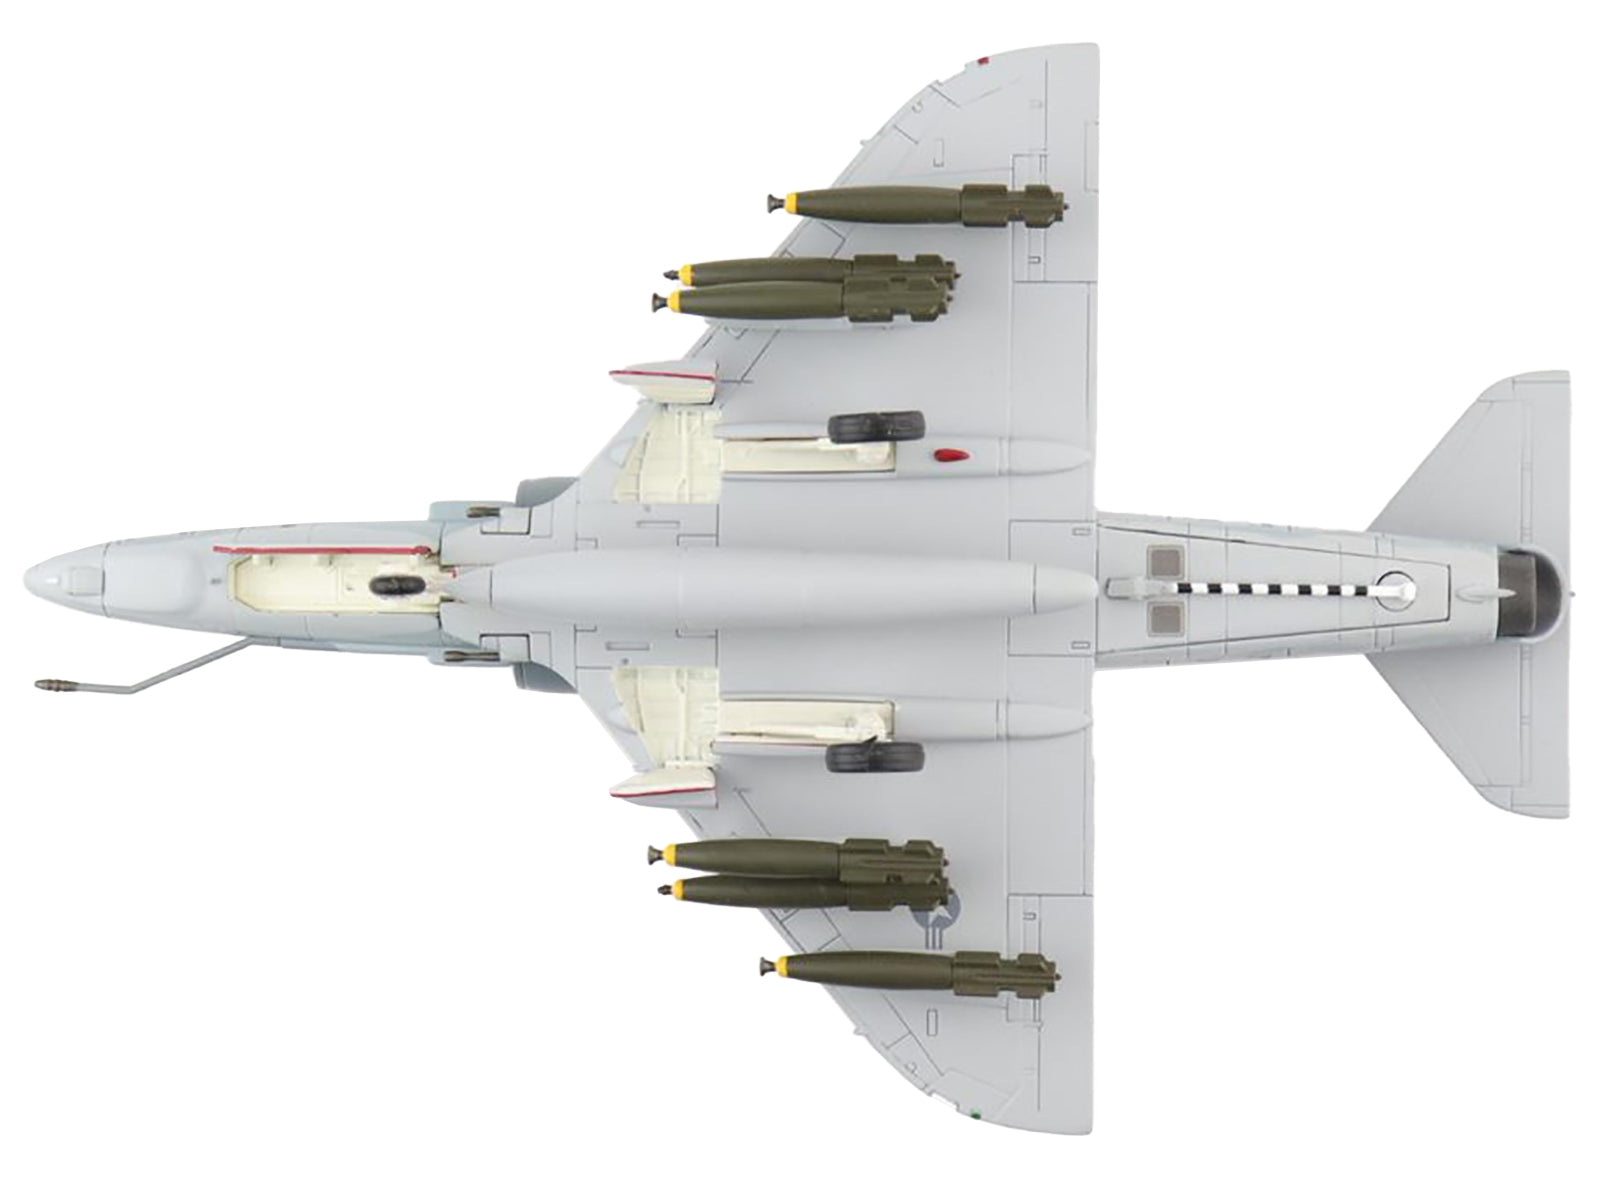 Douglas A-4F Skyhawk Attack Aircraft VMA-142 "Flying Gators" (1984) "Air Power Series" 1/72 Diecast Model by Hobby Master - Homreo